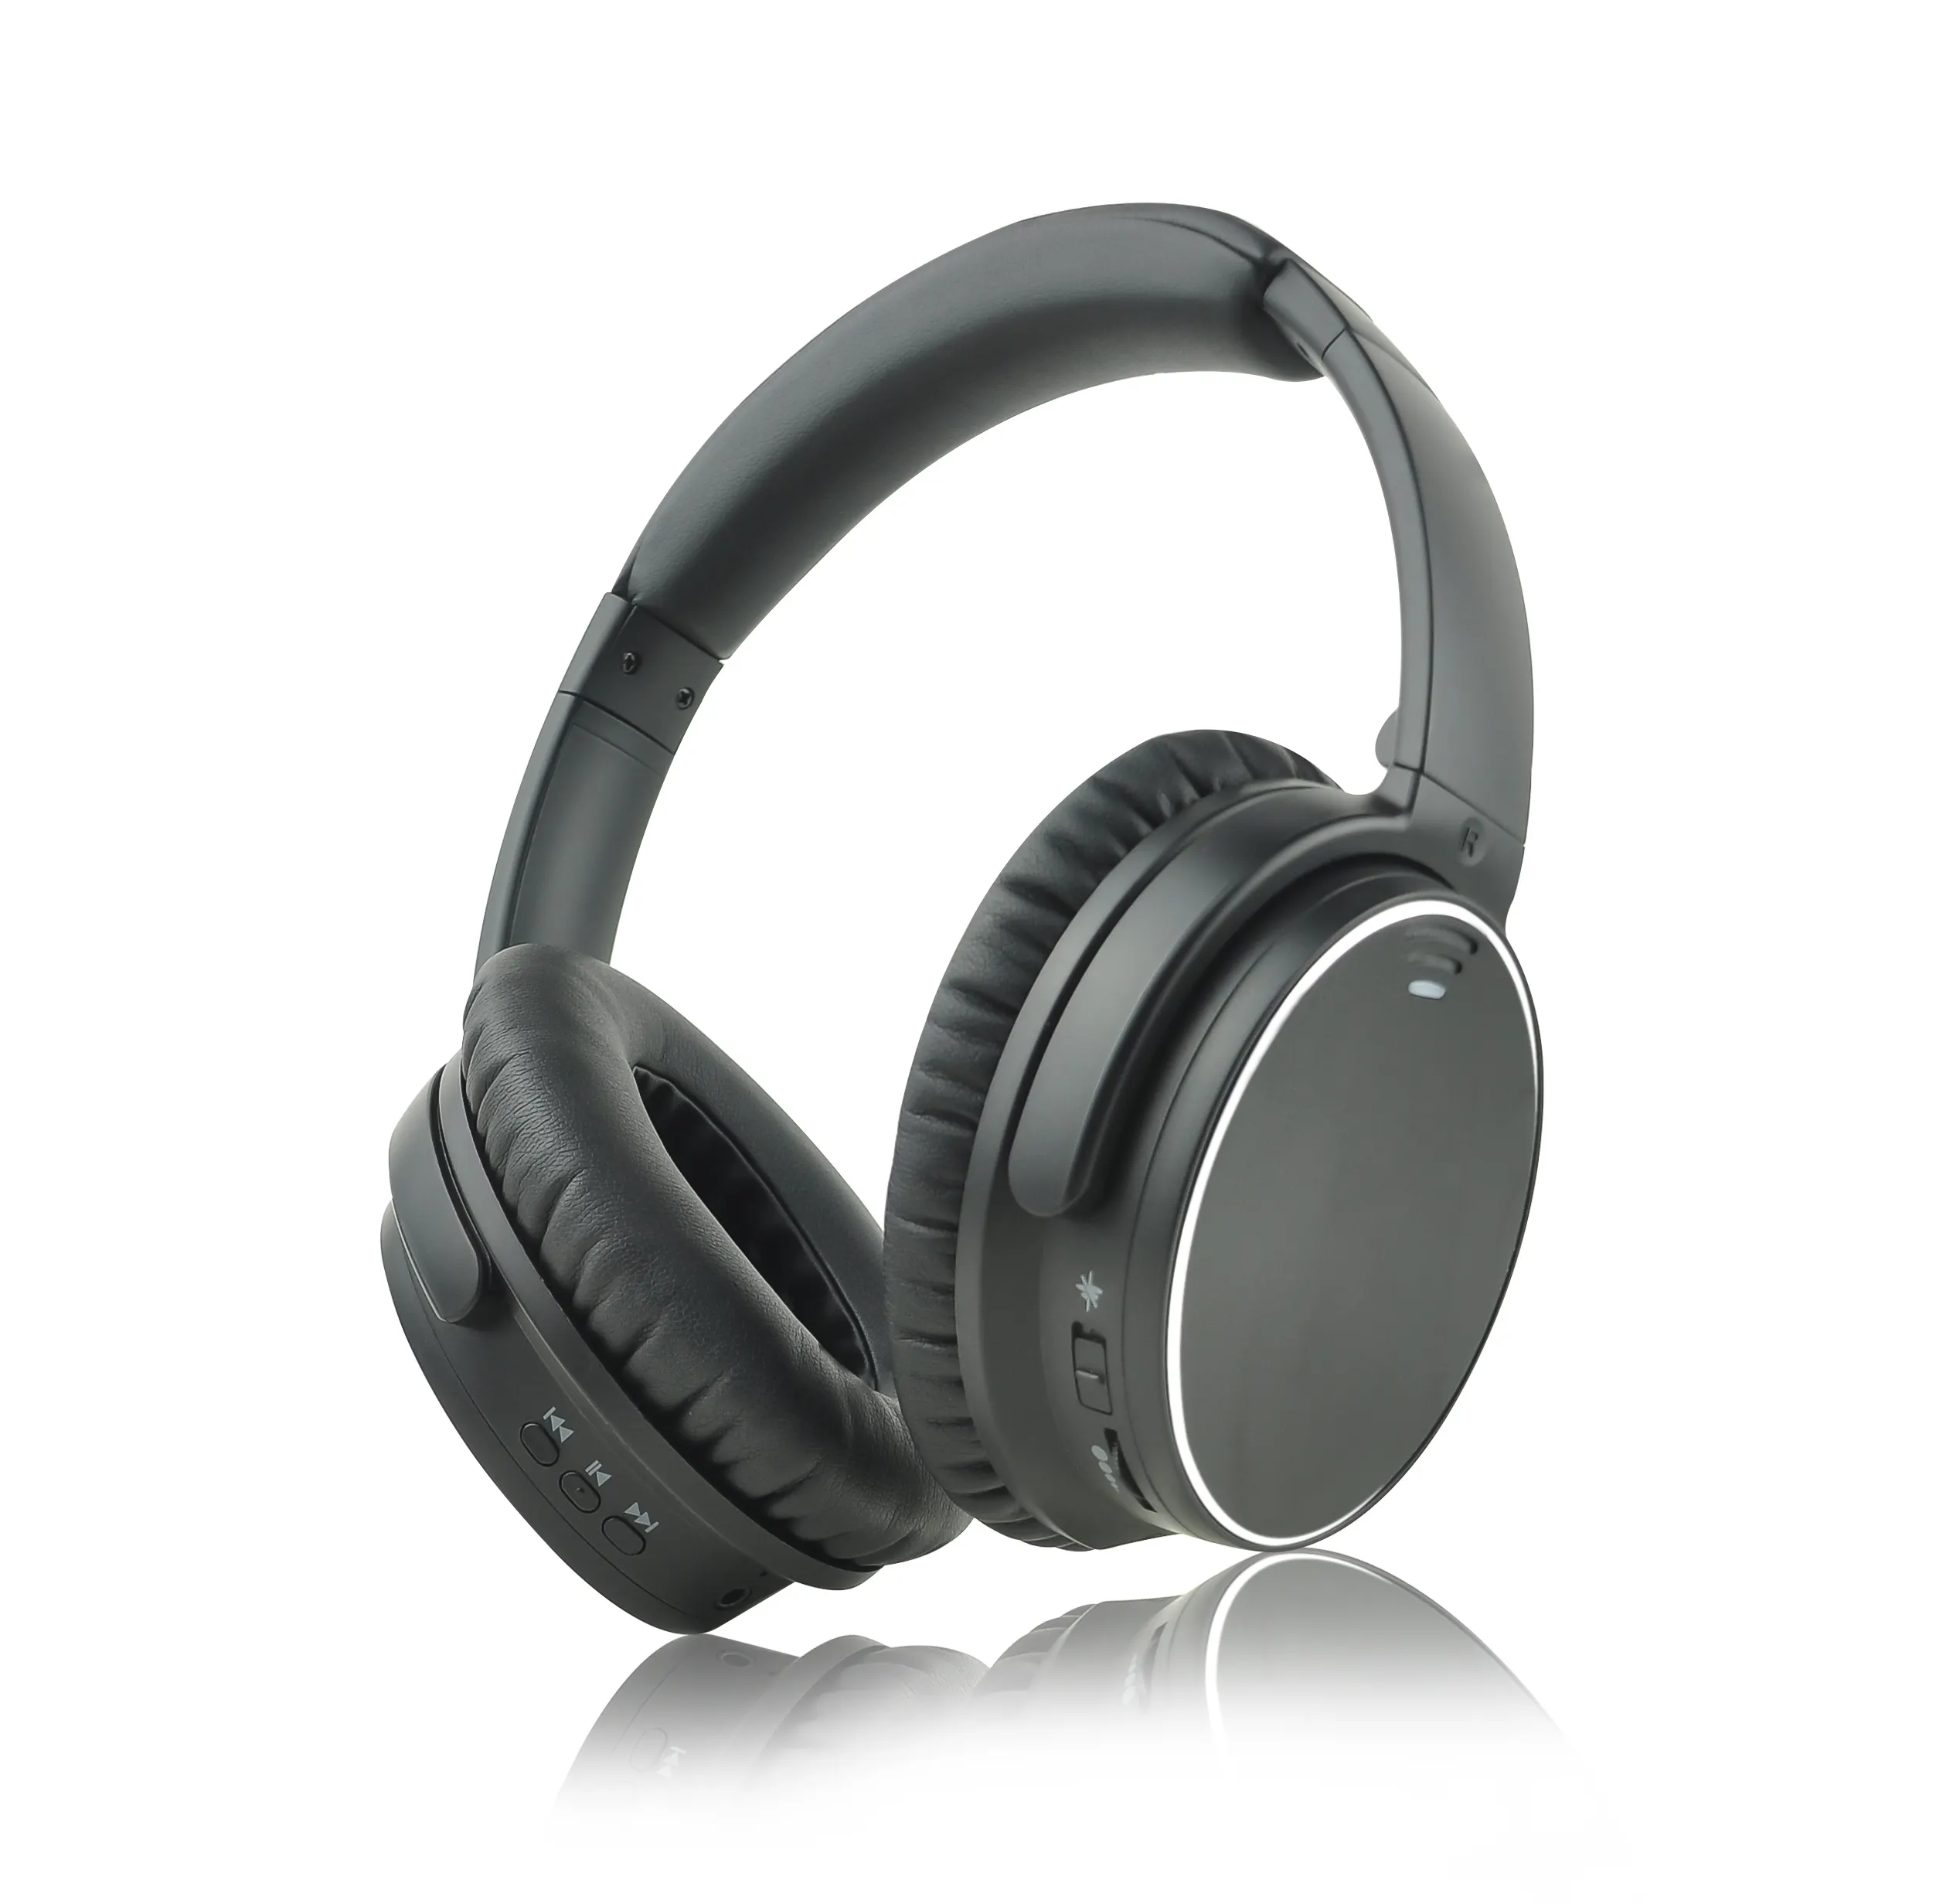 Shenzhen Kleinste Luchtvaart Active Noise Cancelling Anc Draadloze Stereo Hoofdtelefoon Bluetooth Headsets